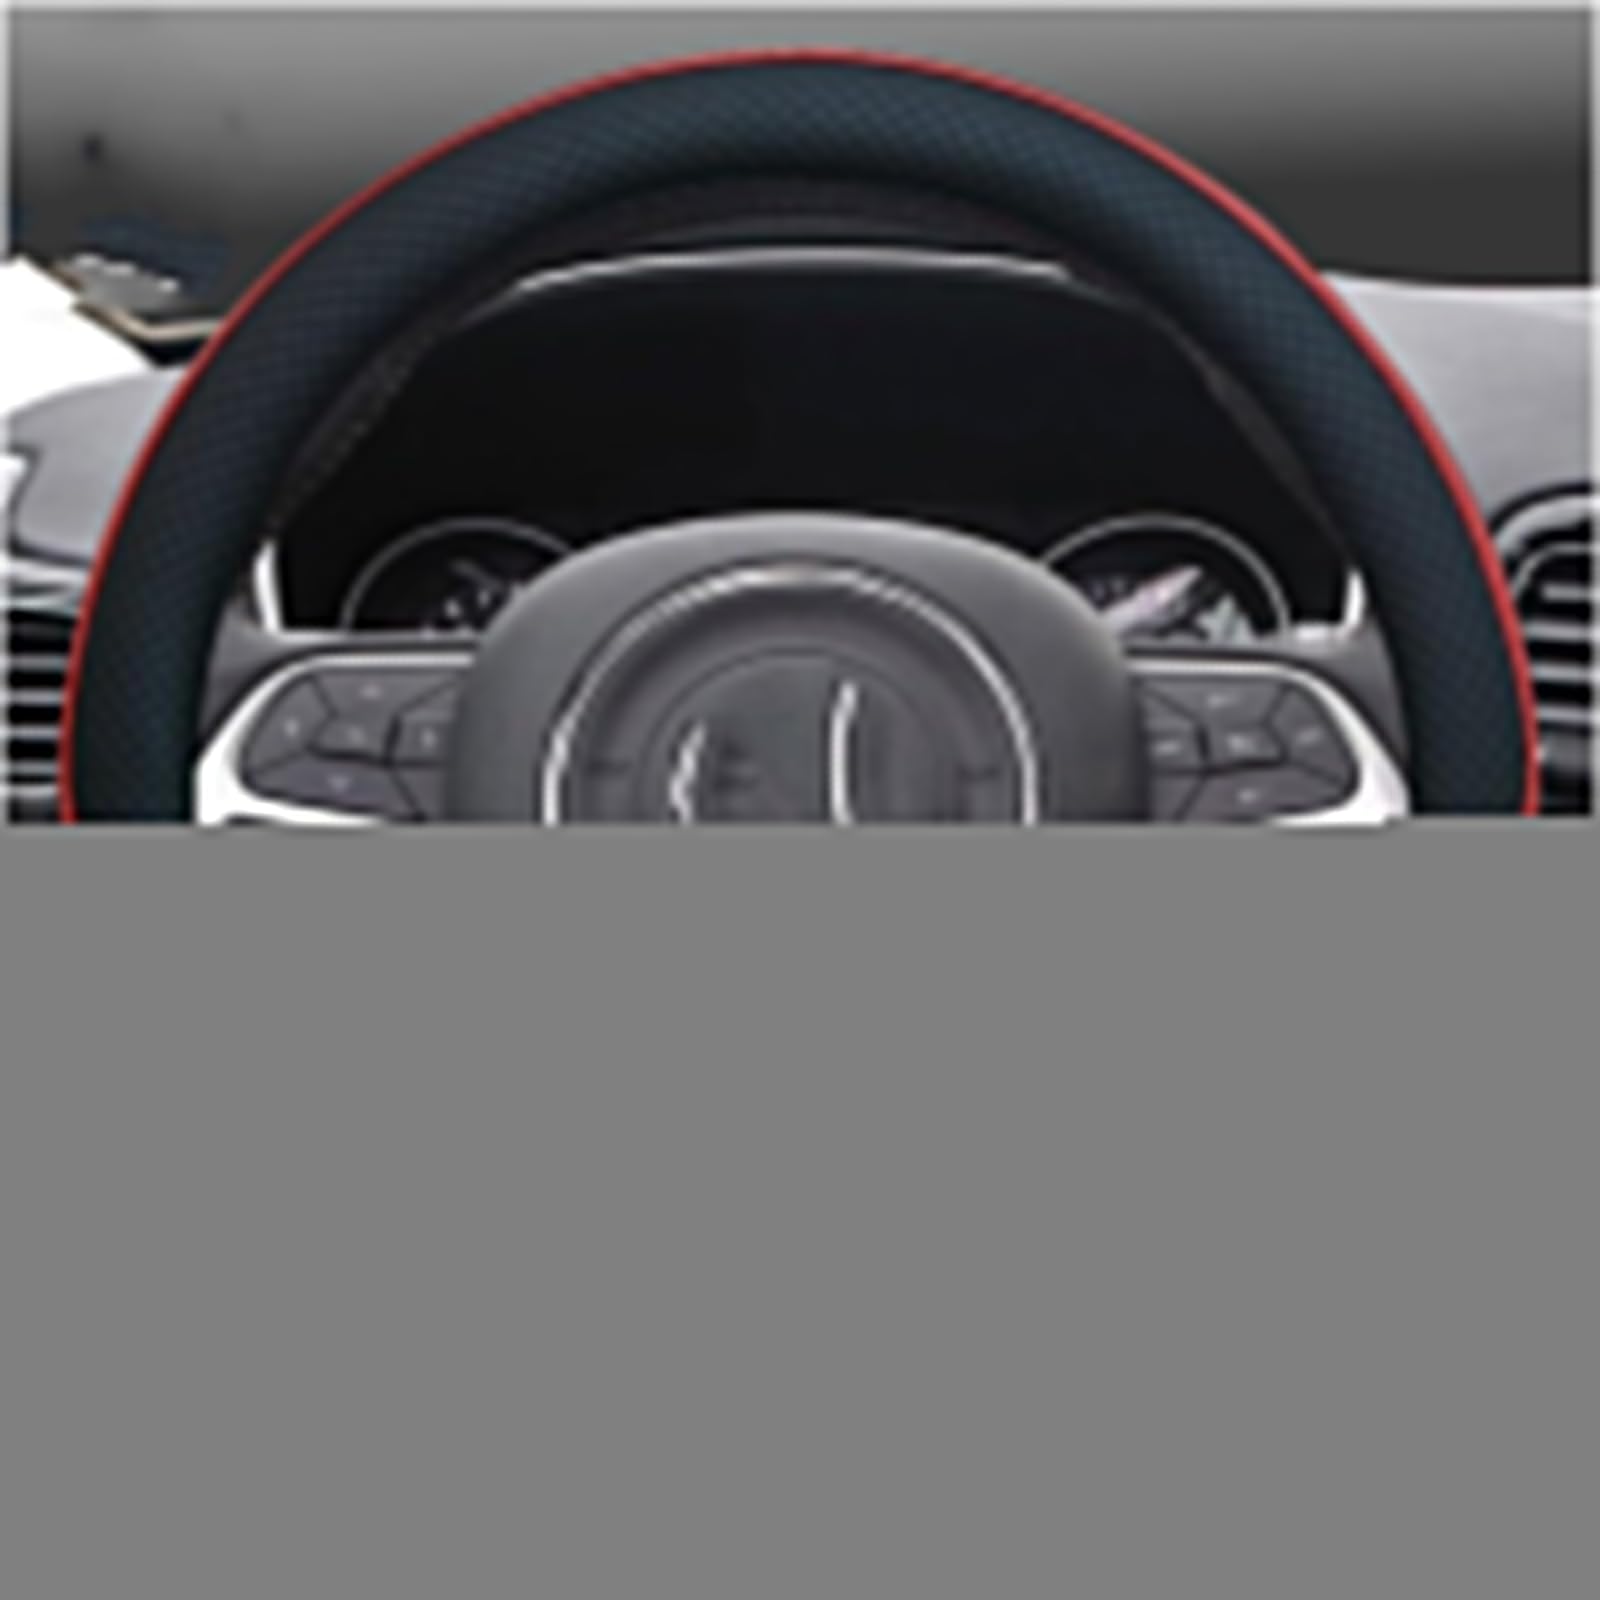 Auto Lenkradbezug für VW Touareg 2011-2018, Durable Anti Rutsch Lenkrad Lenkradschutz, Lenkradschoner Accessoires Universal, 37-38cm, C/Black-red von CAIYUANWANG